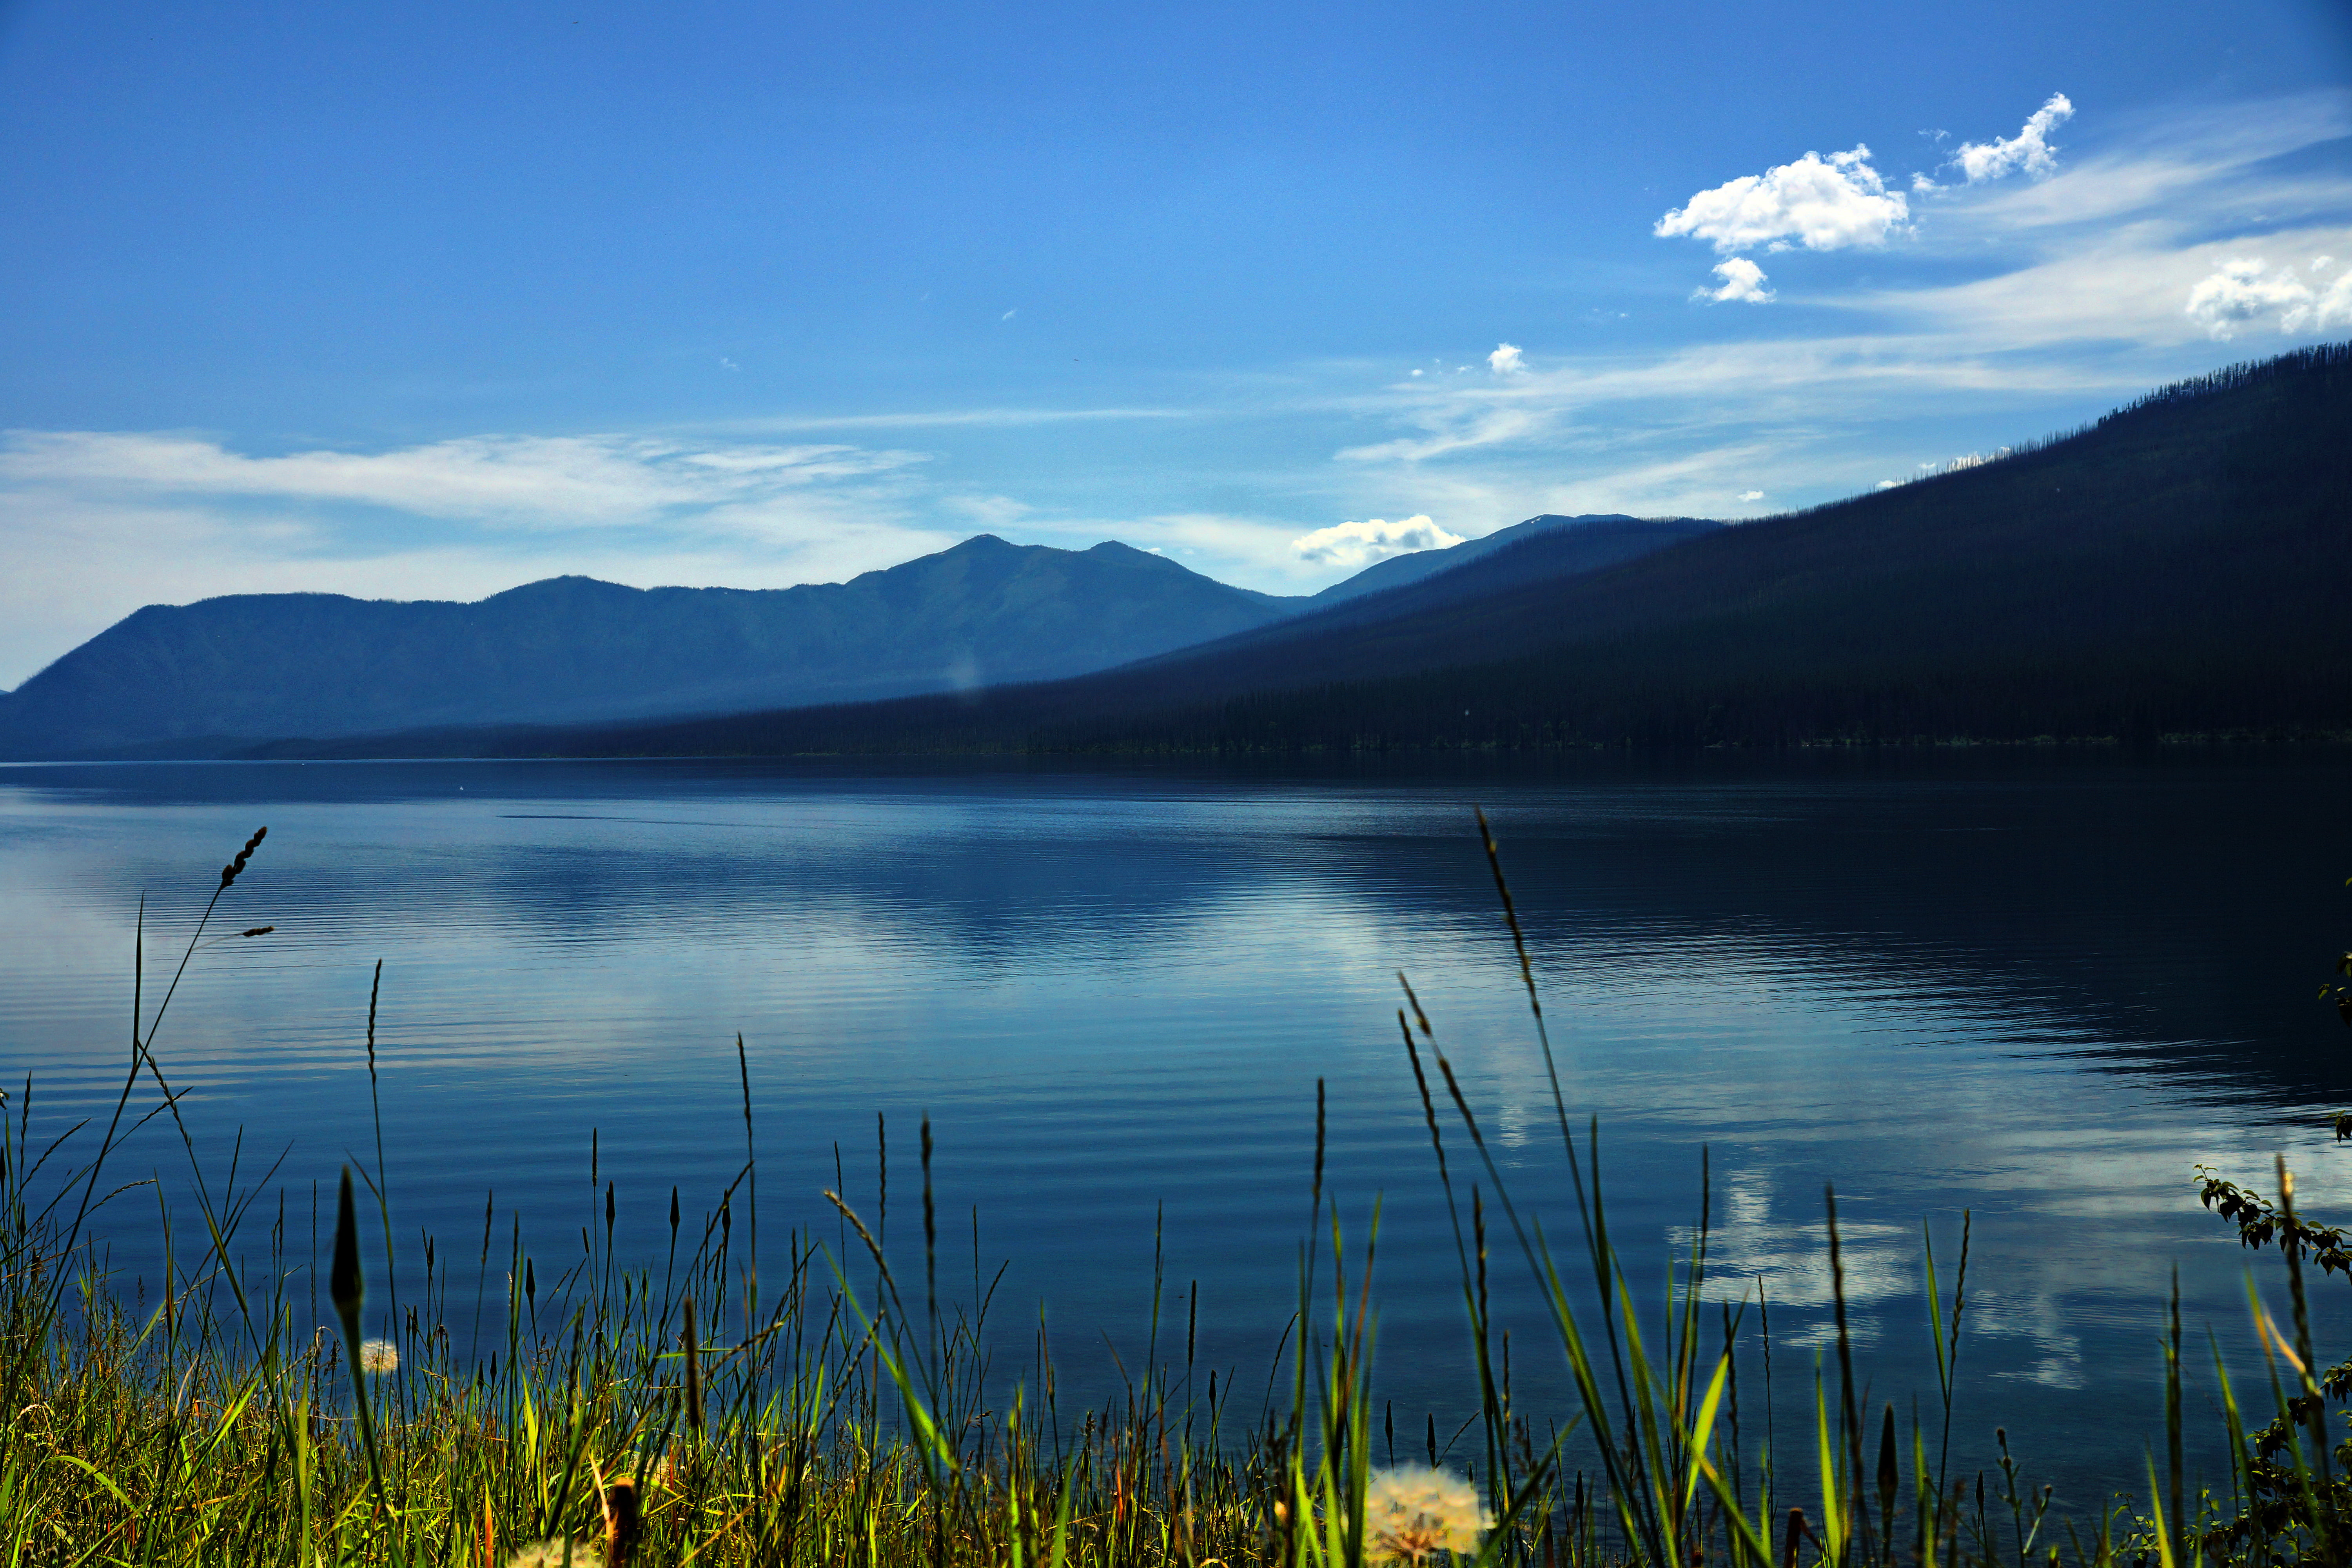 Озеро время работы. Озеро Флатхед штат Монтана. Озеро Макдональд. Озеро Йер. Озеро времени.